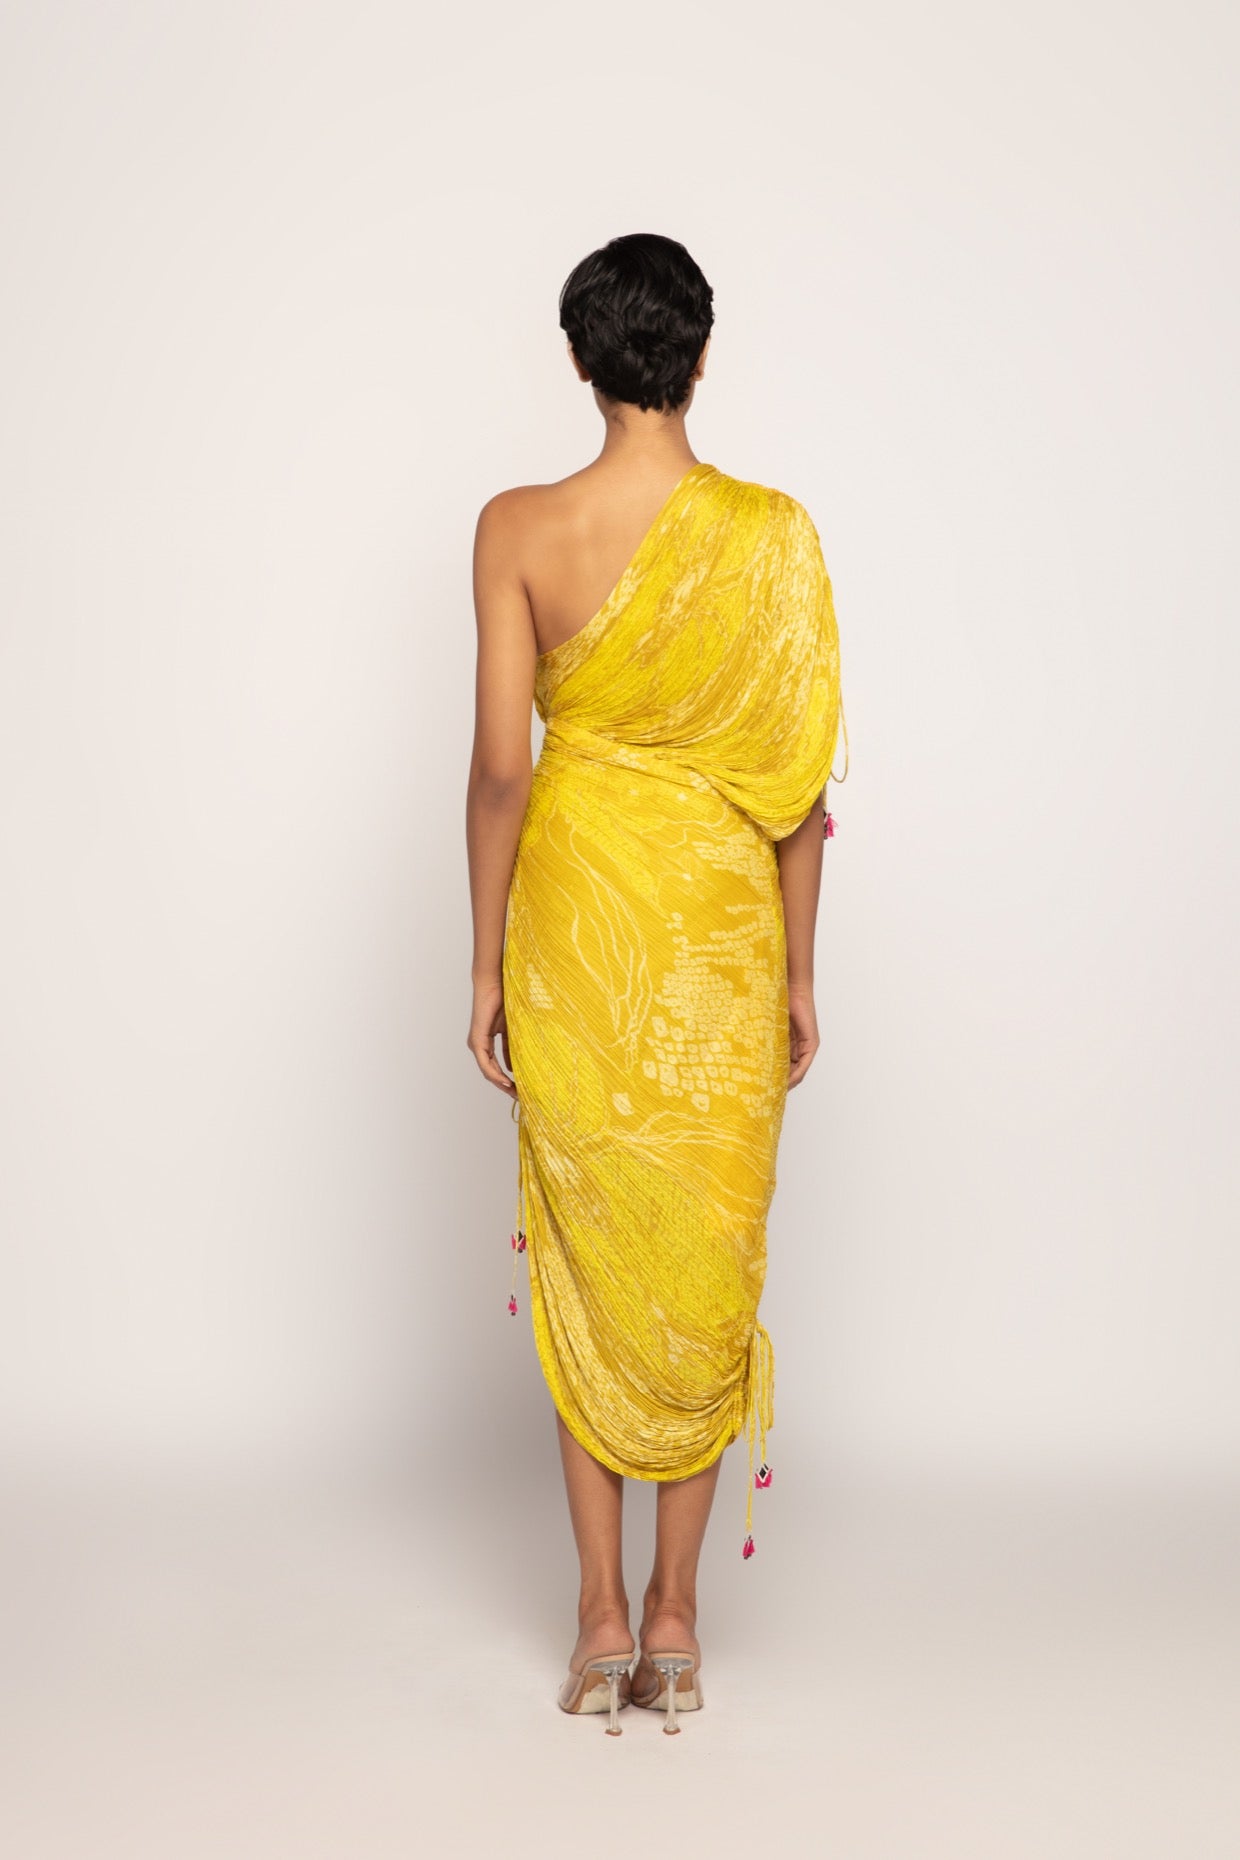 Perinwinkle Bandhani Print, Hand Micro Pleated Sari Style Dress